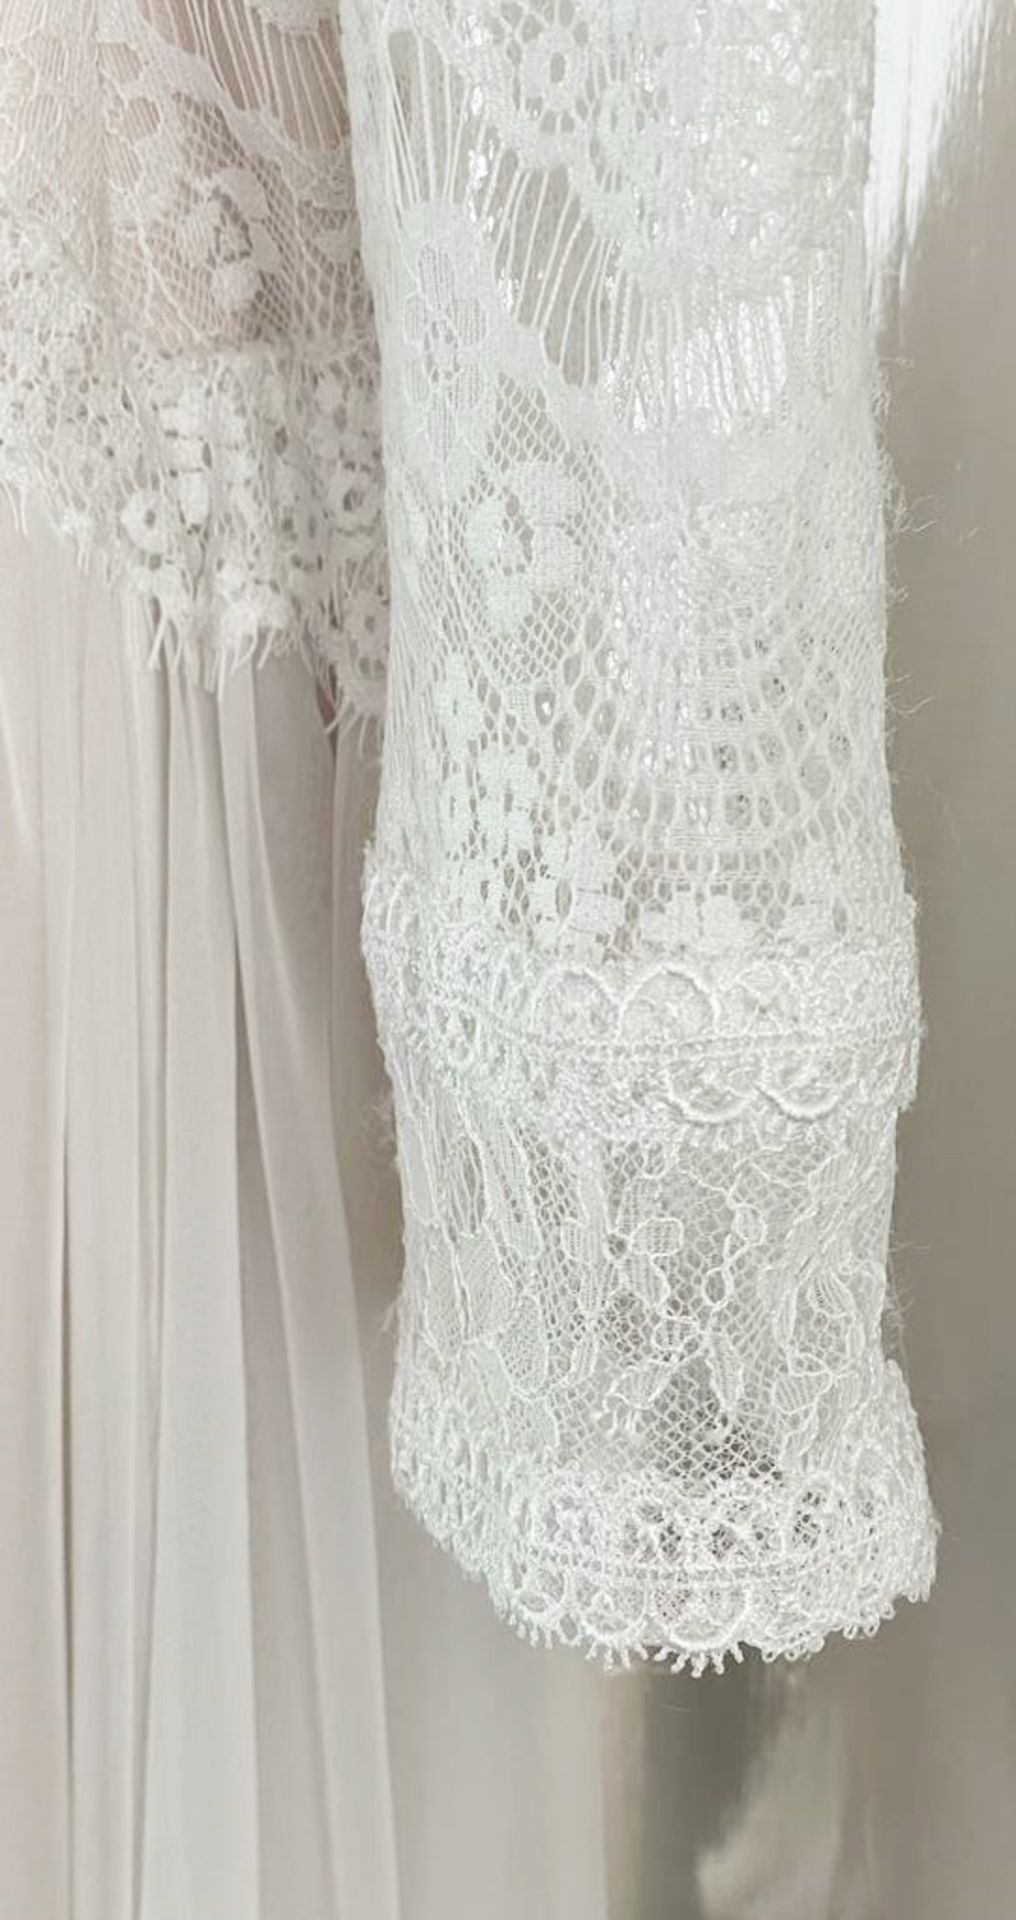 1 x MAGGIE SOTTERO 'Deirdre' Designer Wedding Dress Bridal Gown - Size: UK 10 - Original RRP £15,060 - Image 8 of 11